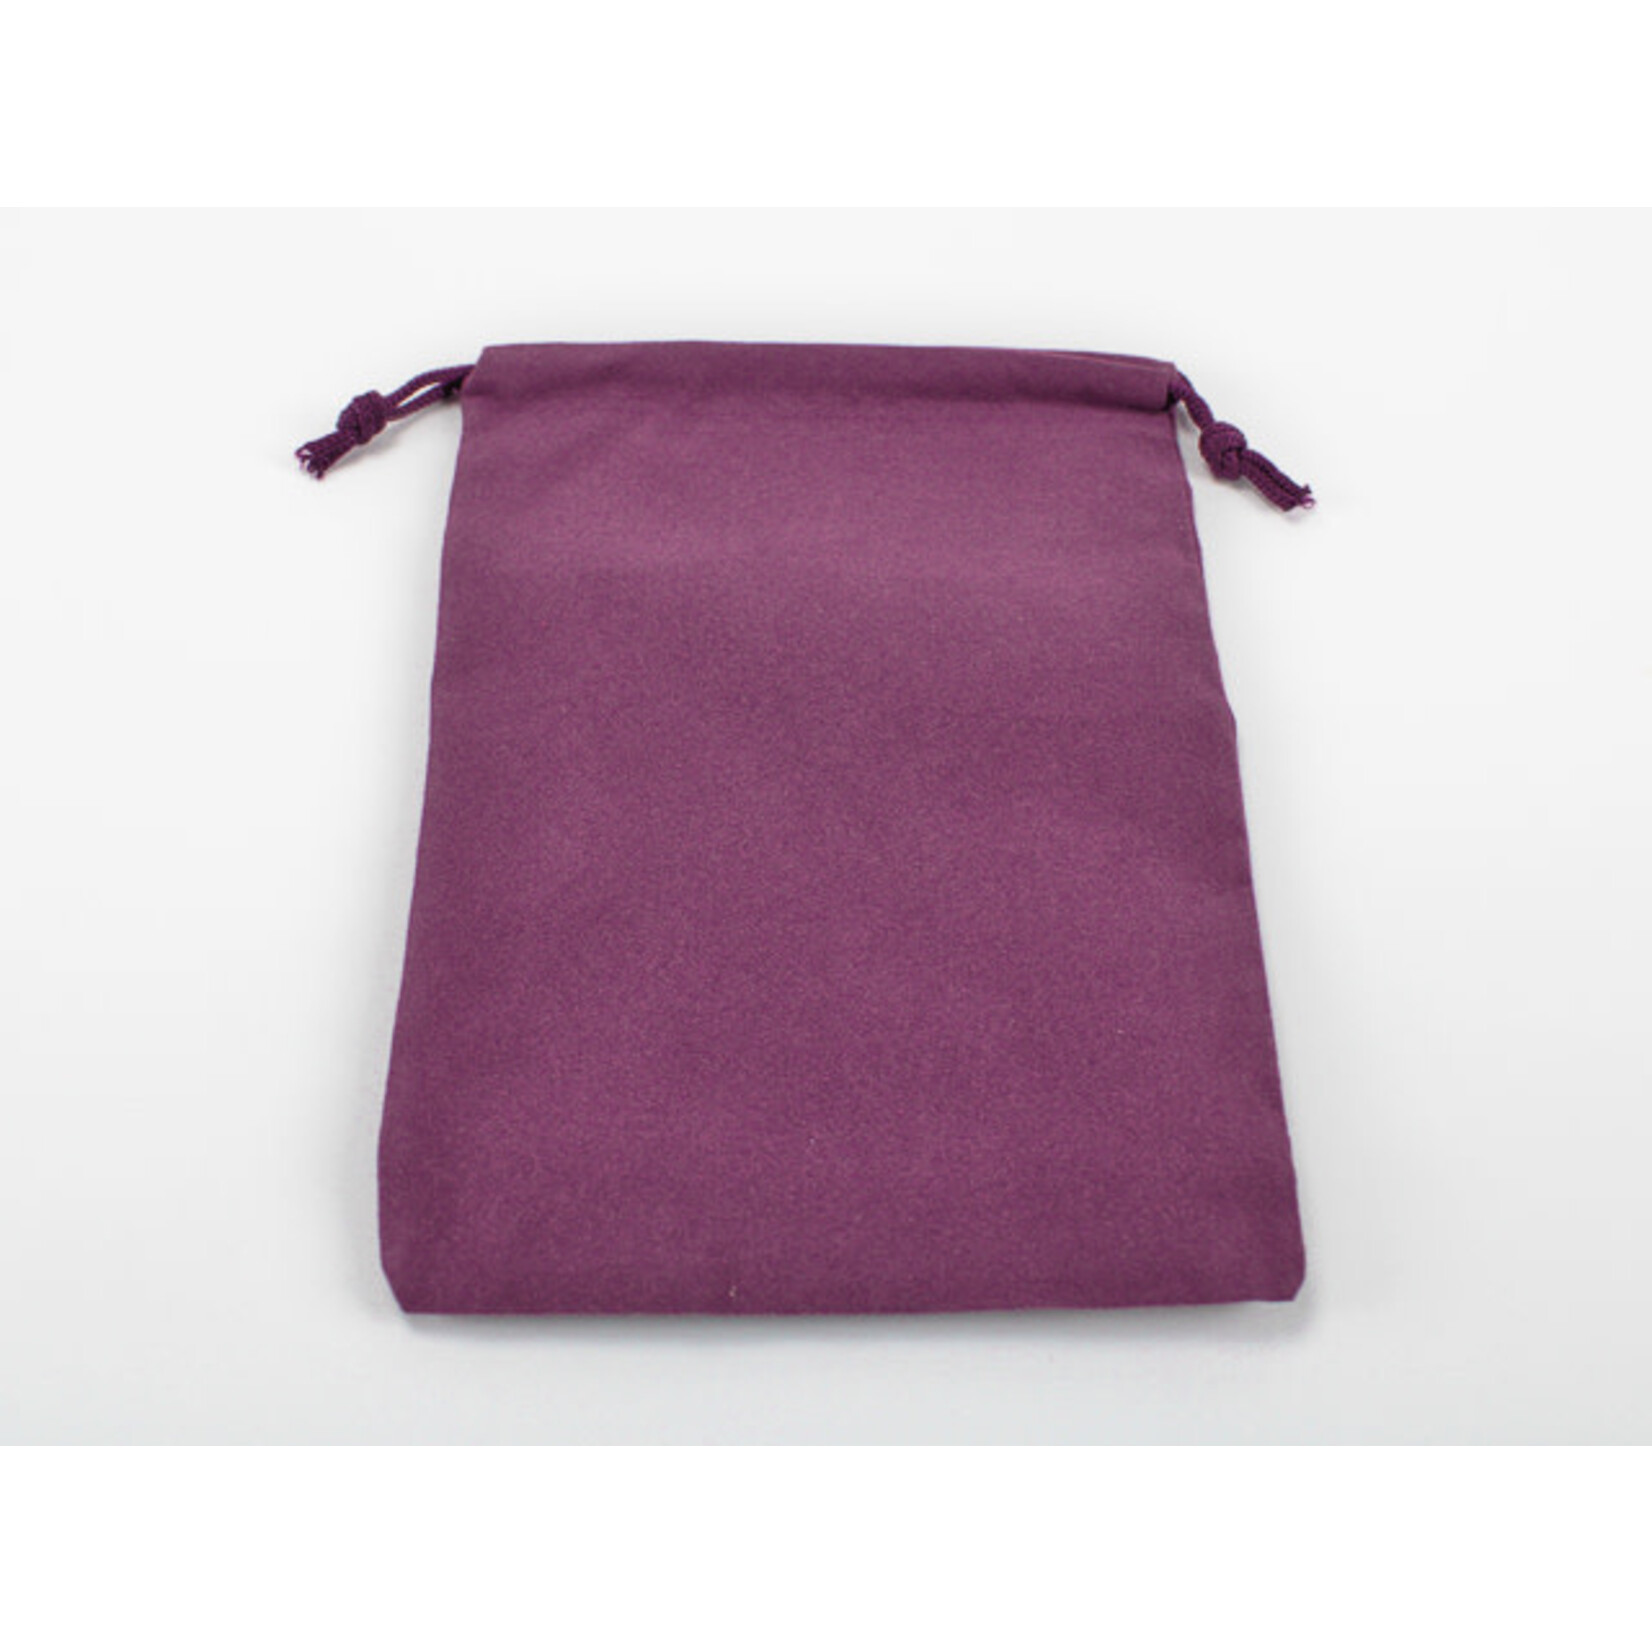 Chessex Dice Bag Suedecloth (L) Purple 5" x 7 1/2"